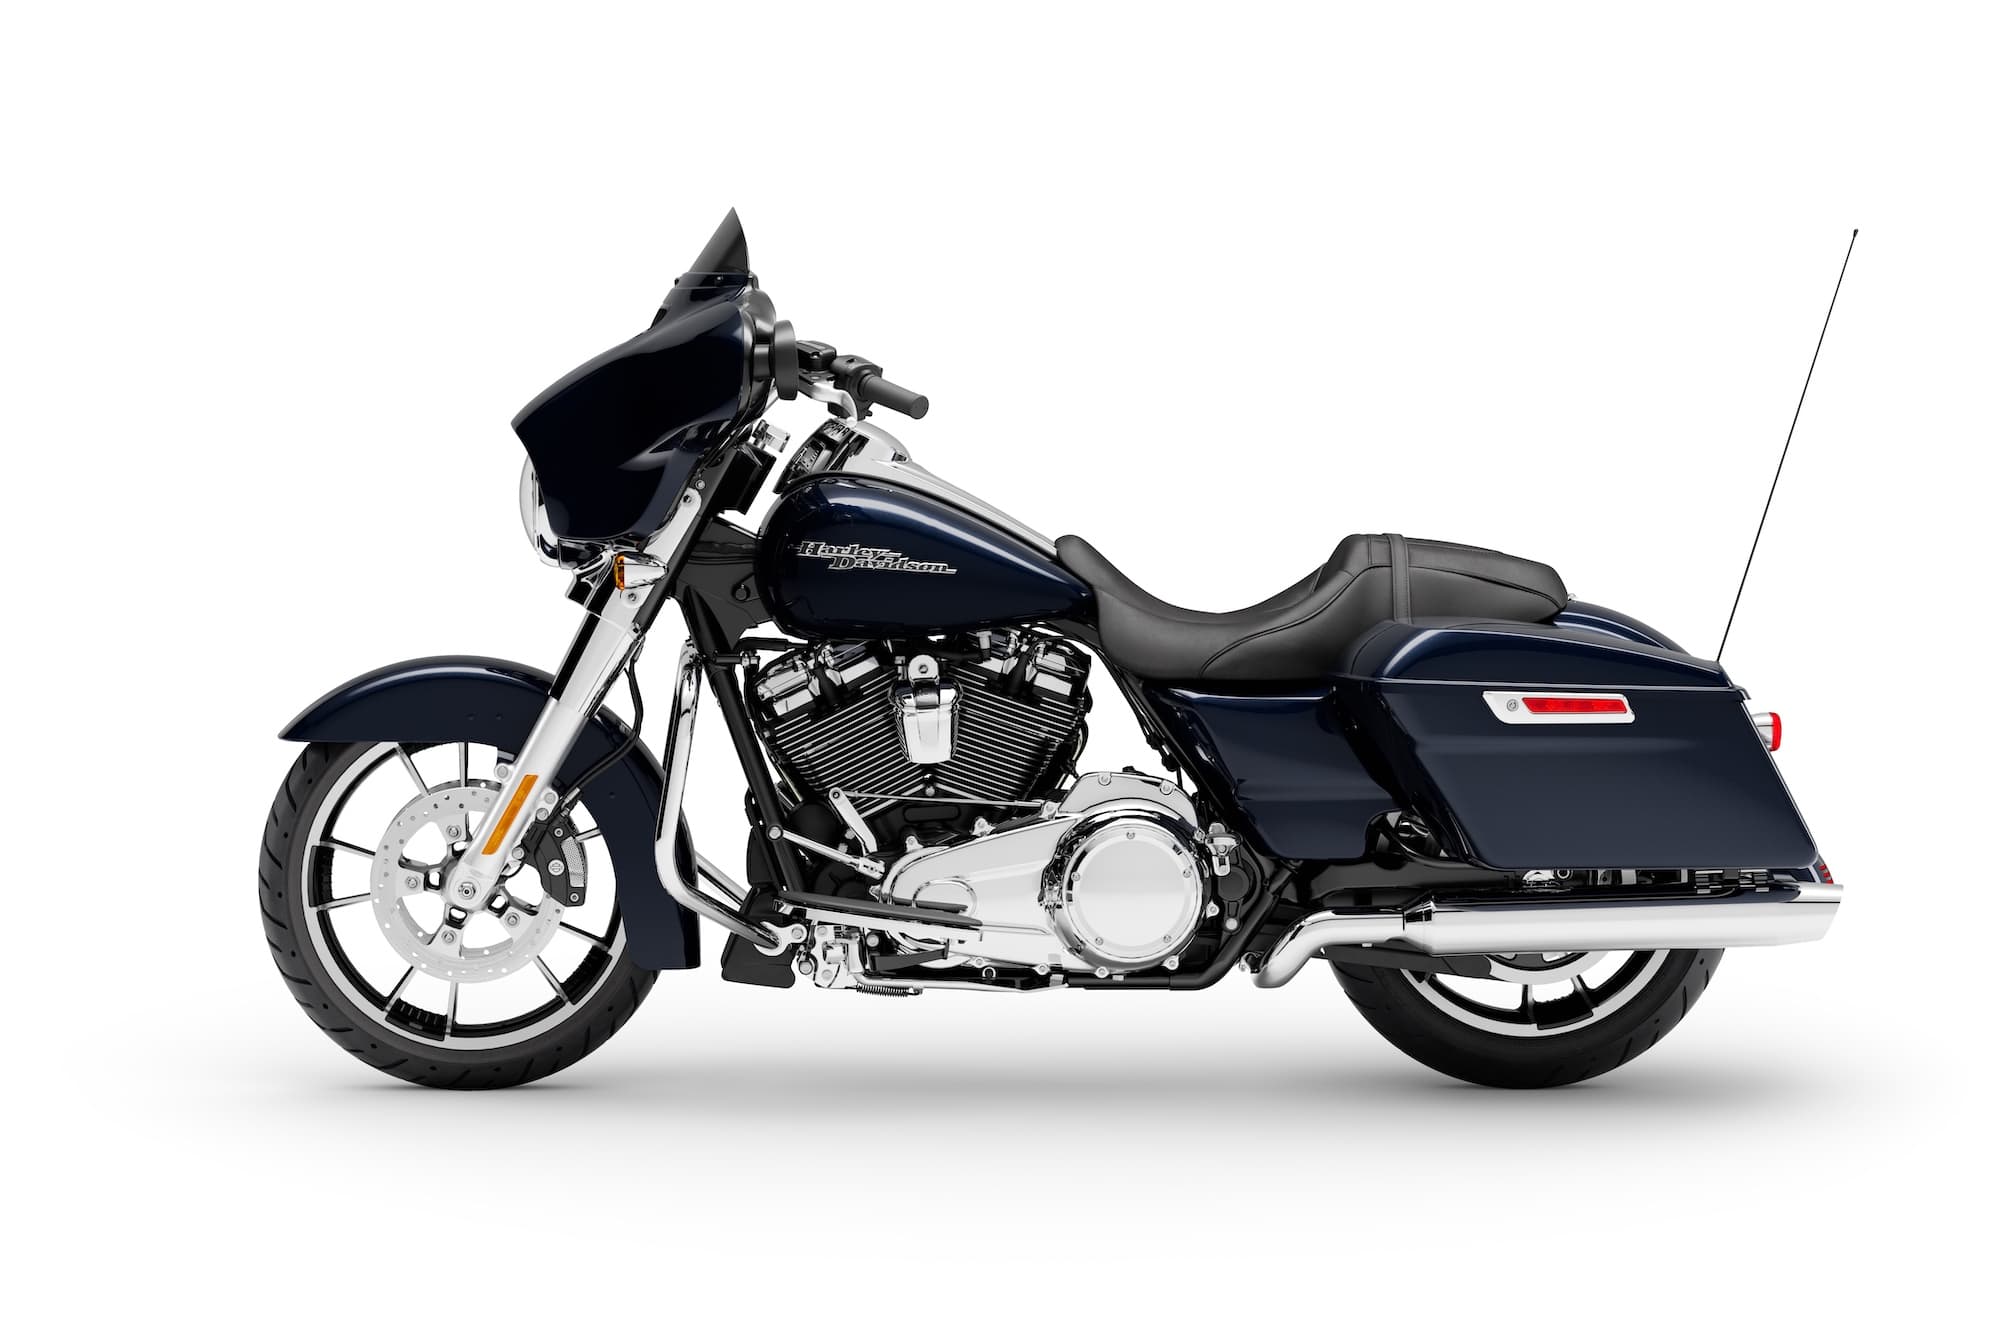 2020 Harley-Davidson FLHX Street Glide LHS black studio image